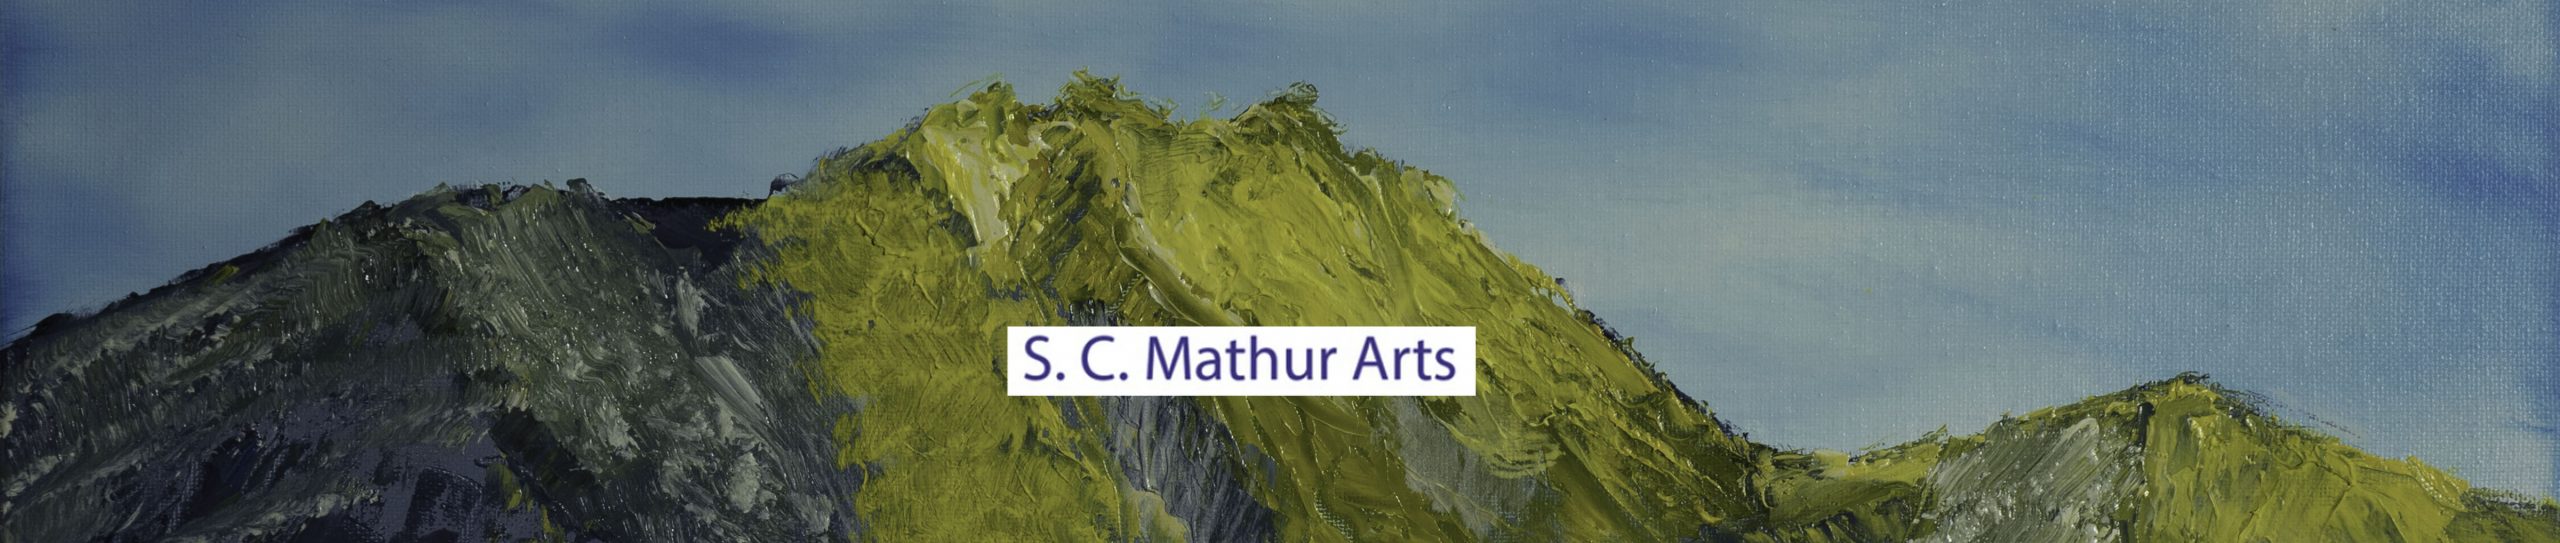 S. C. Mathur Arts